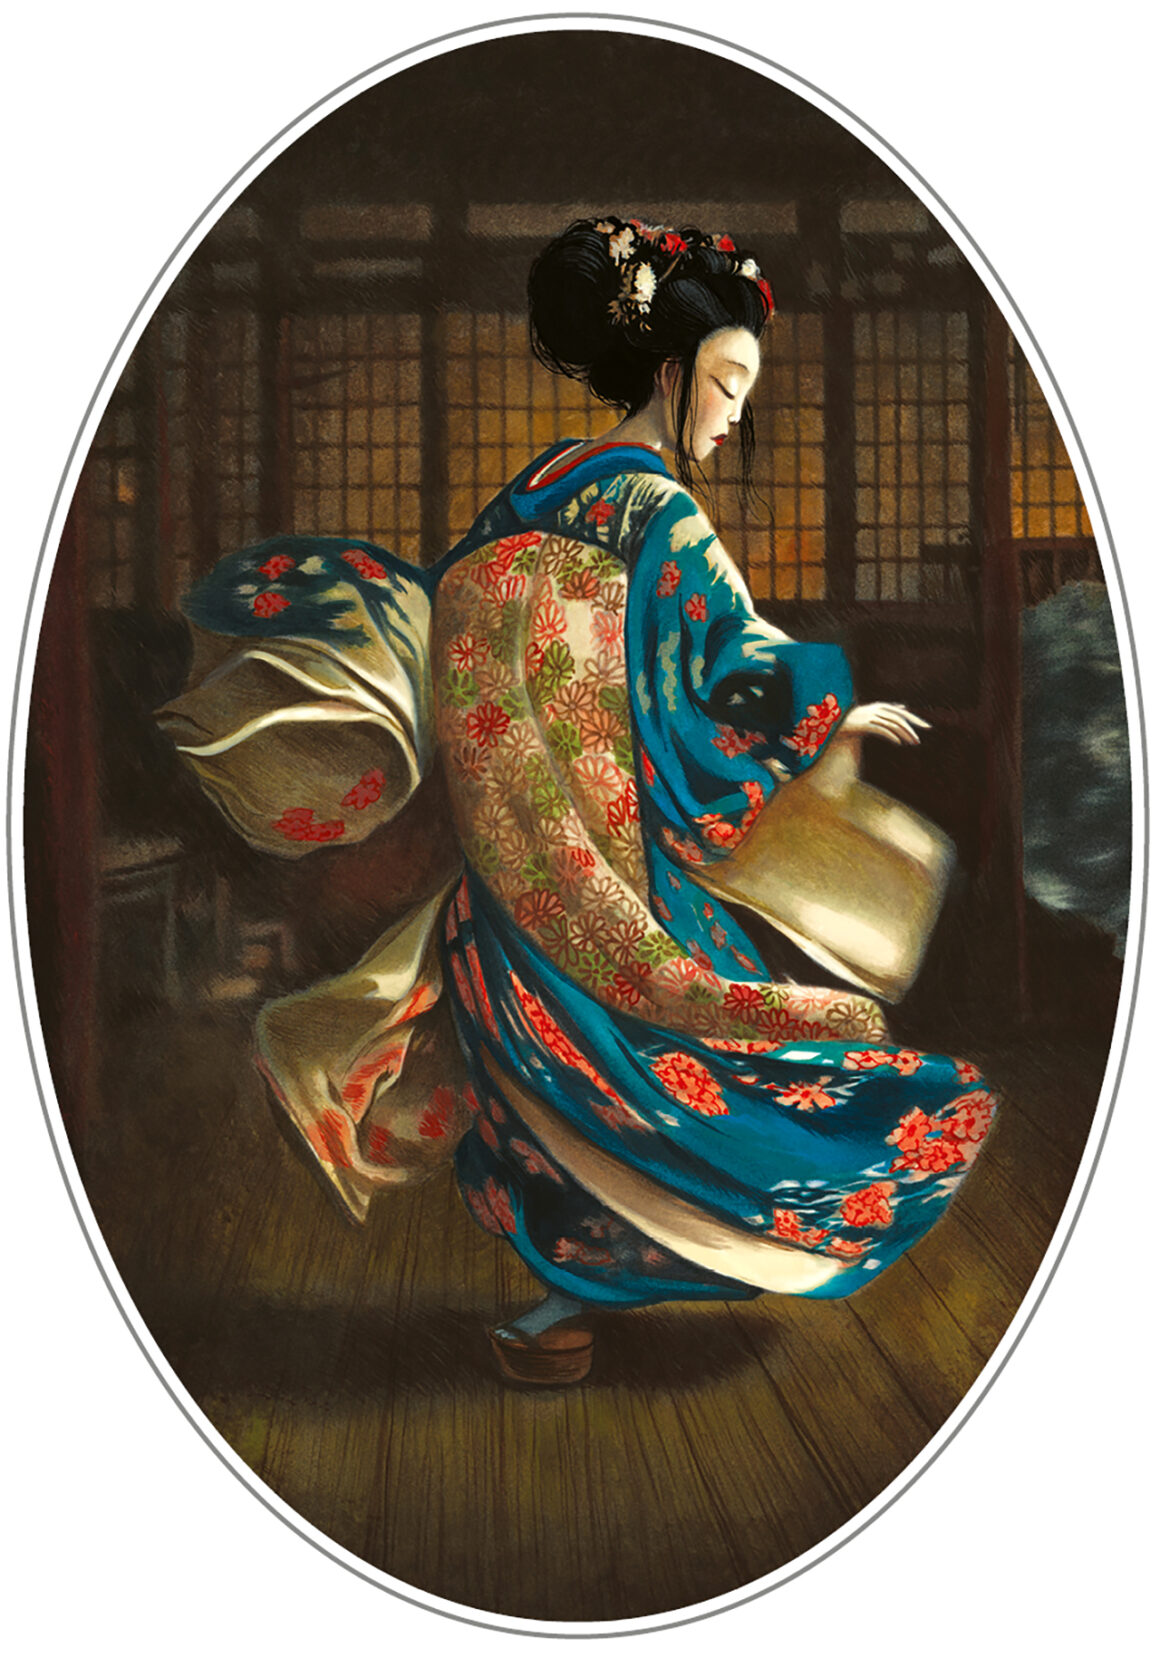 Stories of samurai women